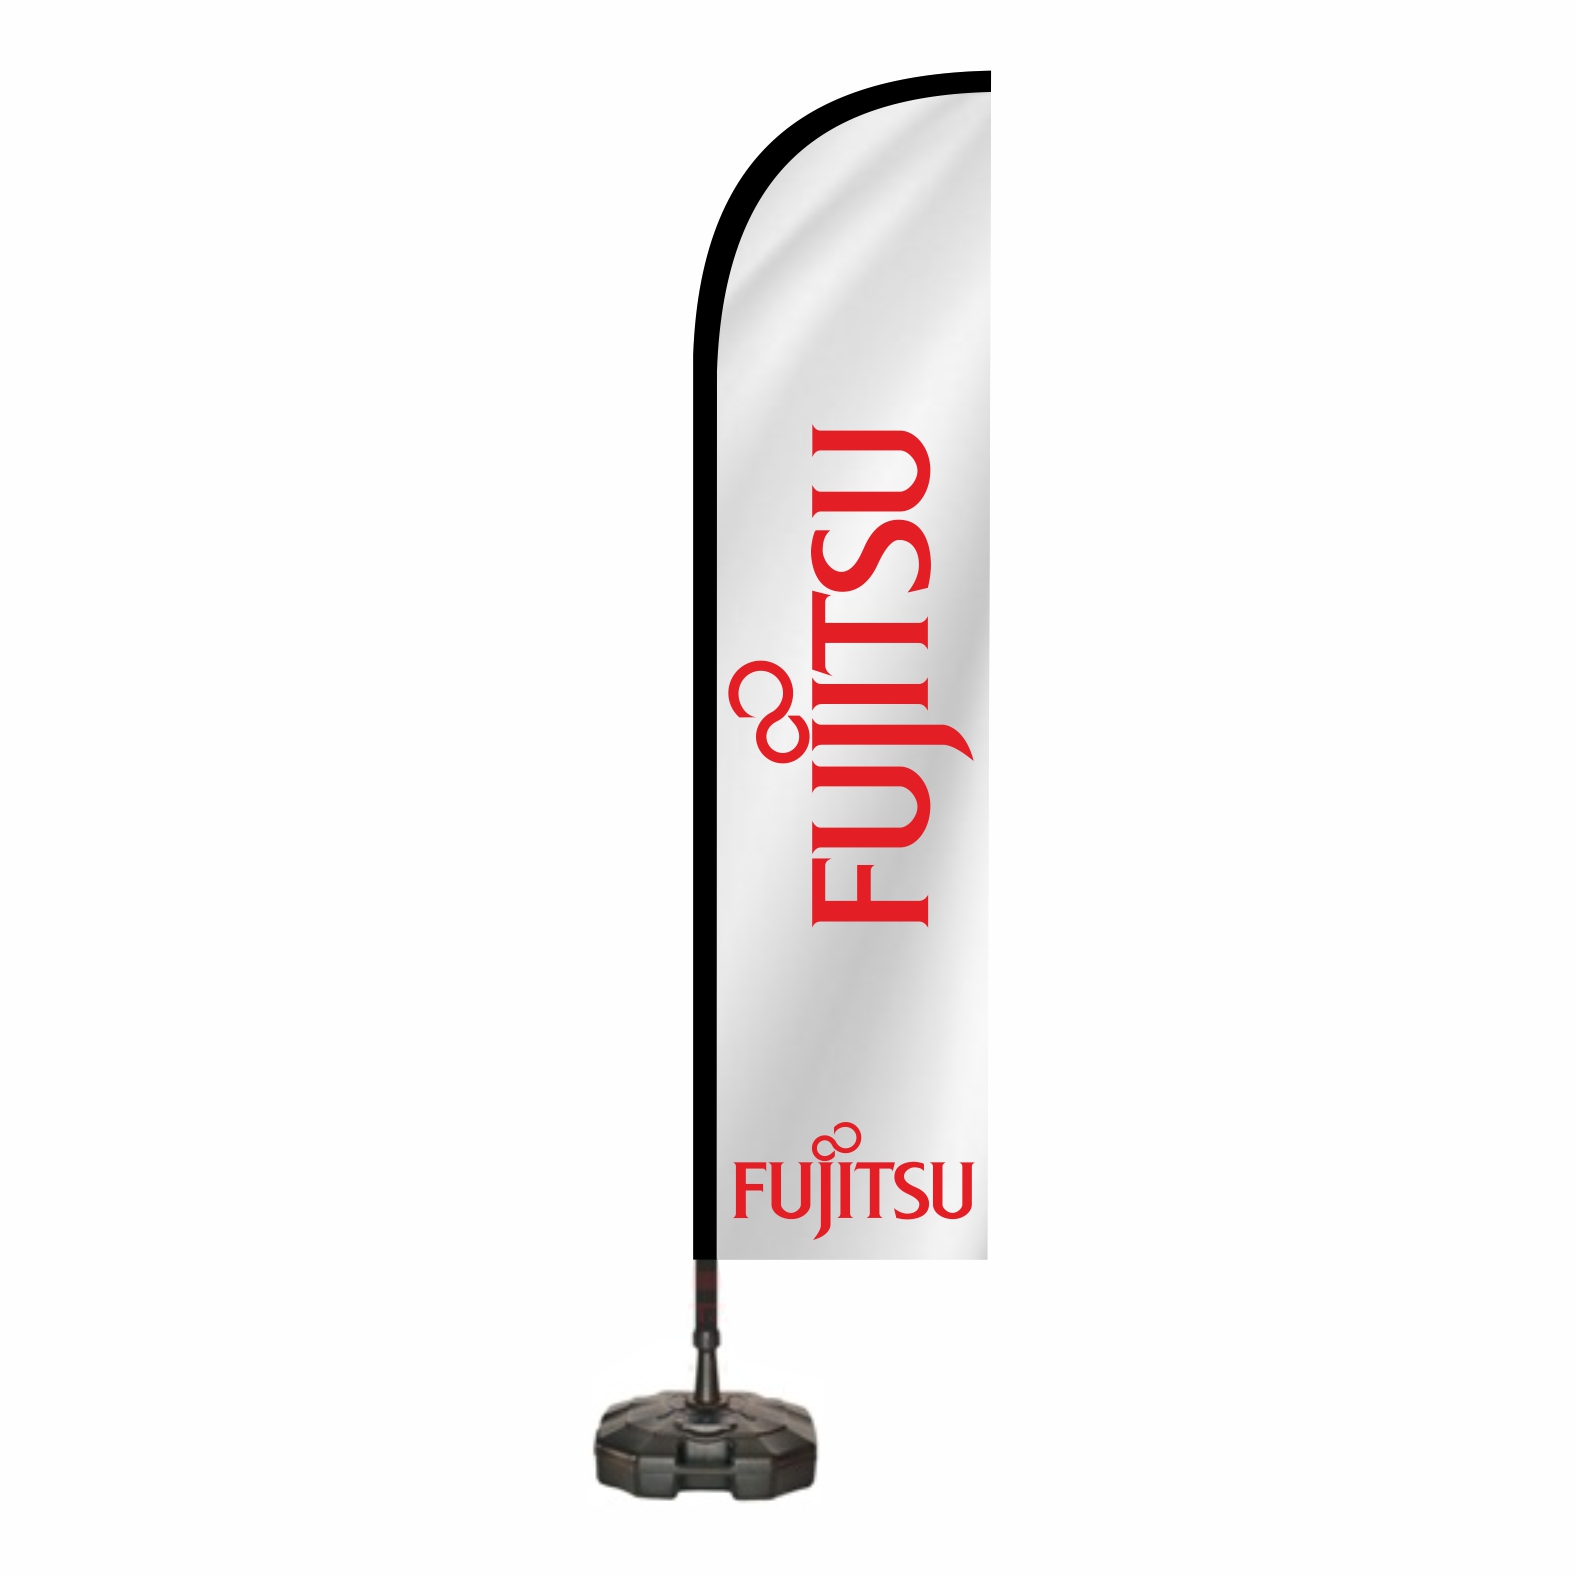 Fujitsu Oltal Bayra imalat